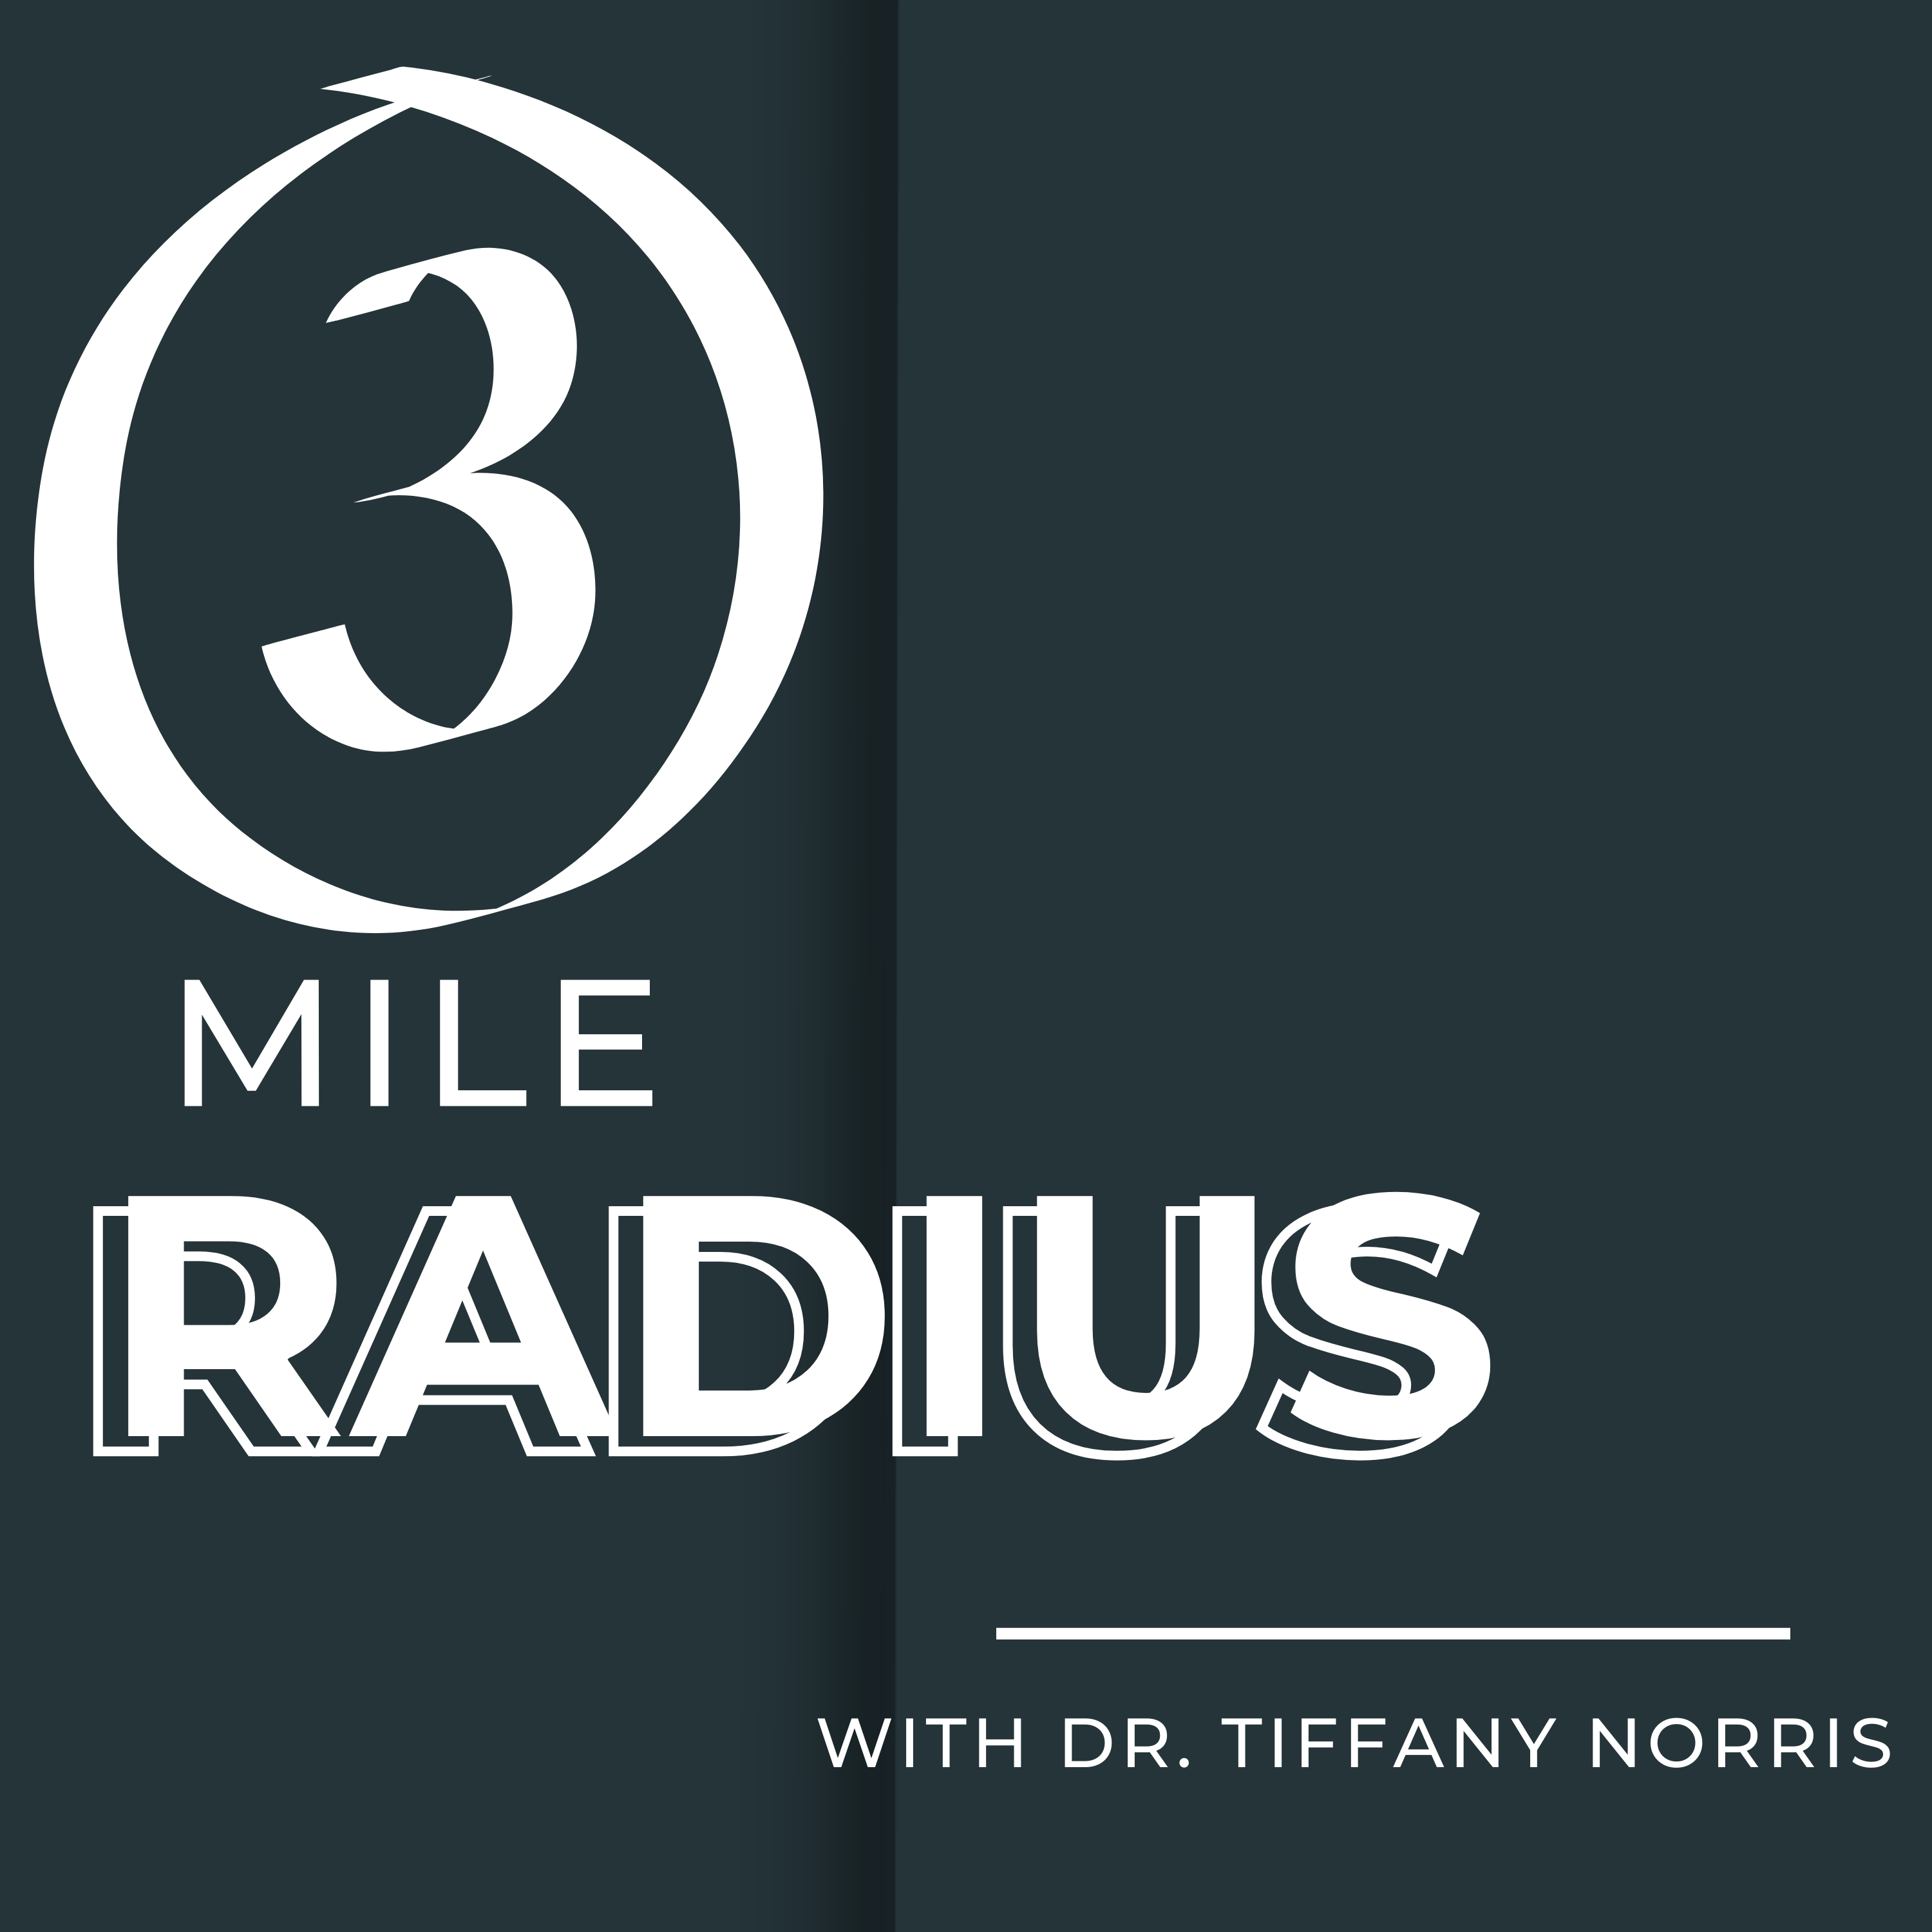 Artwork for podcast 3 Mile Radius